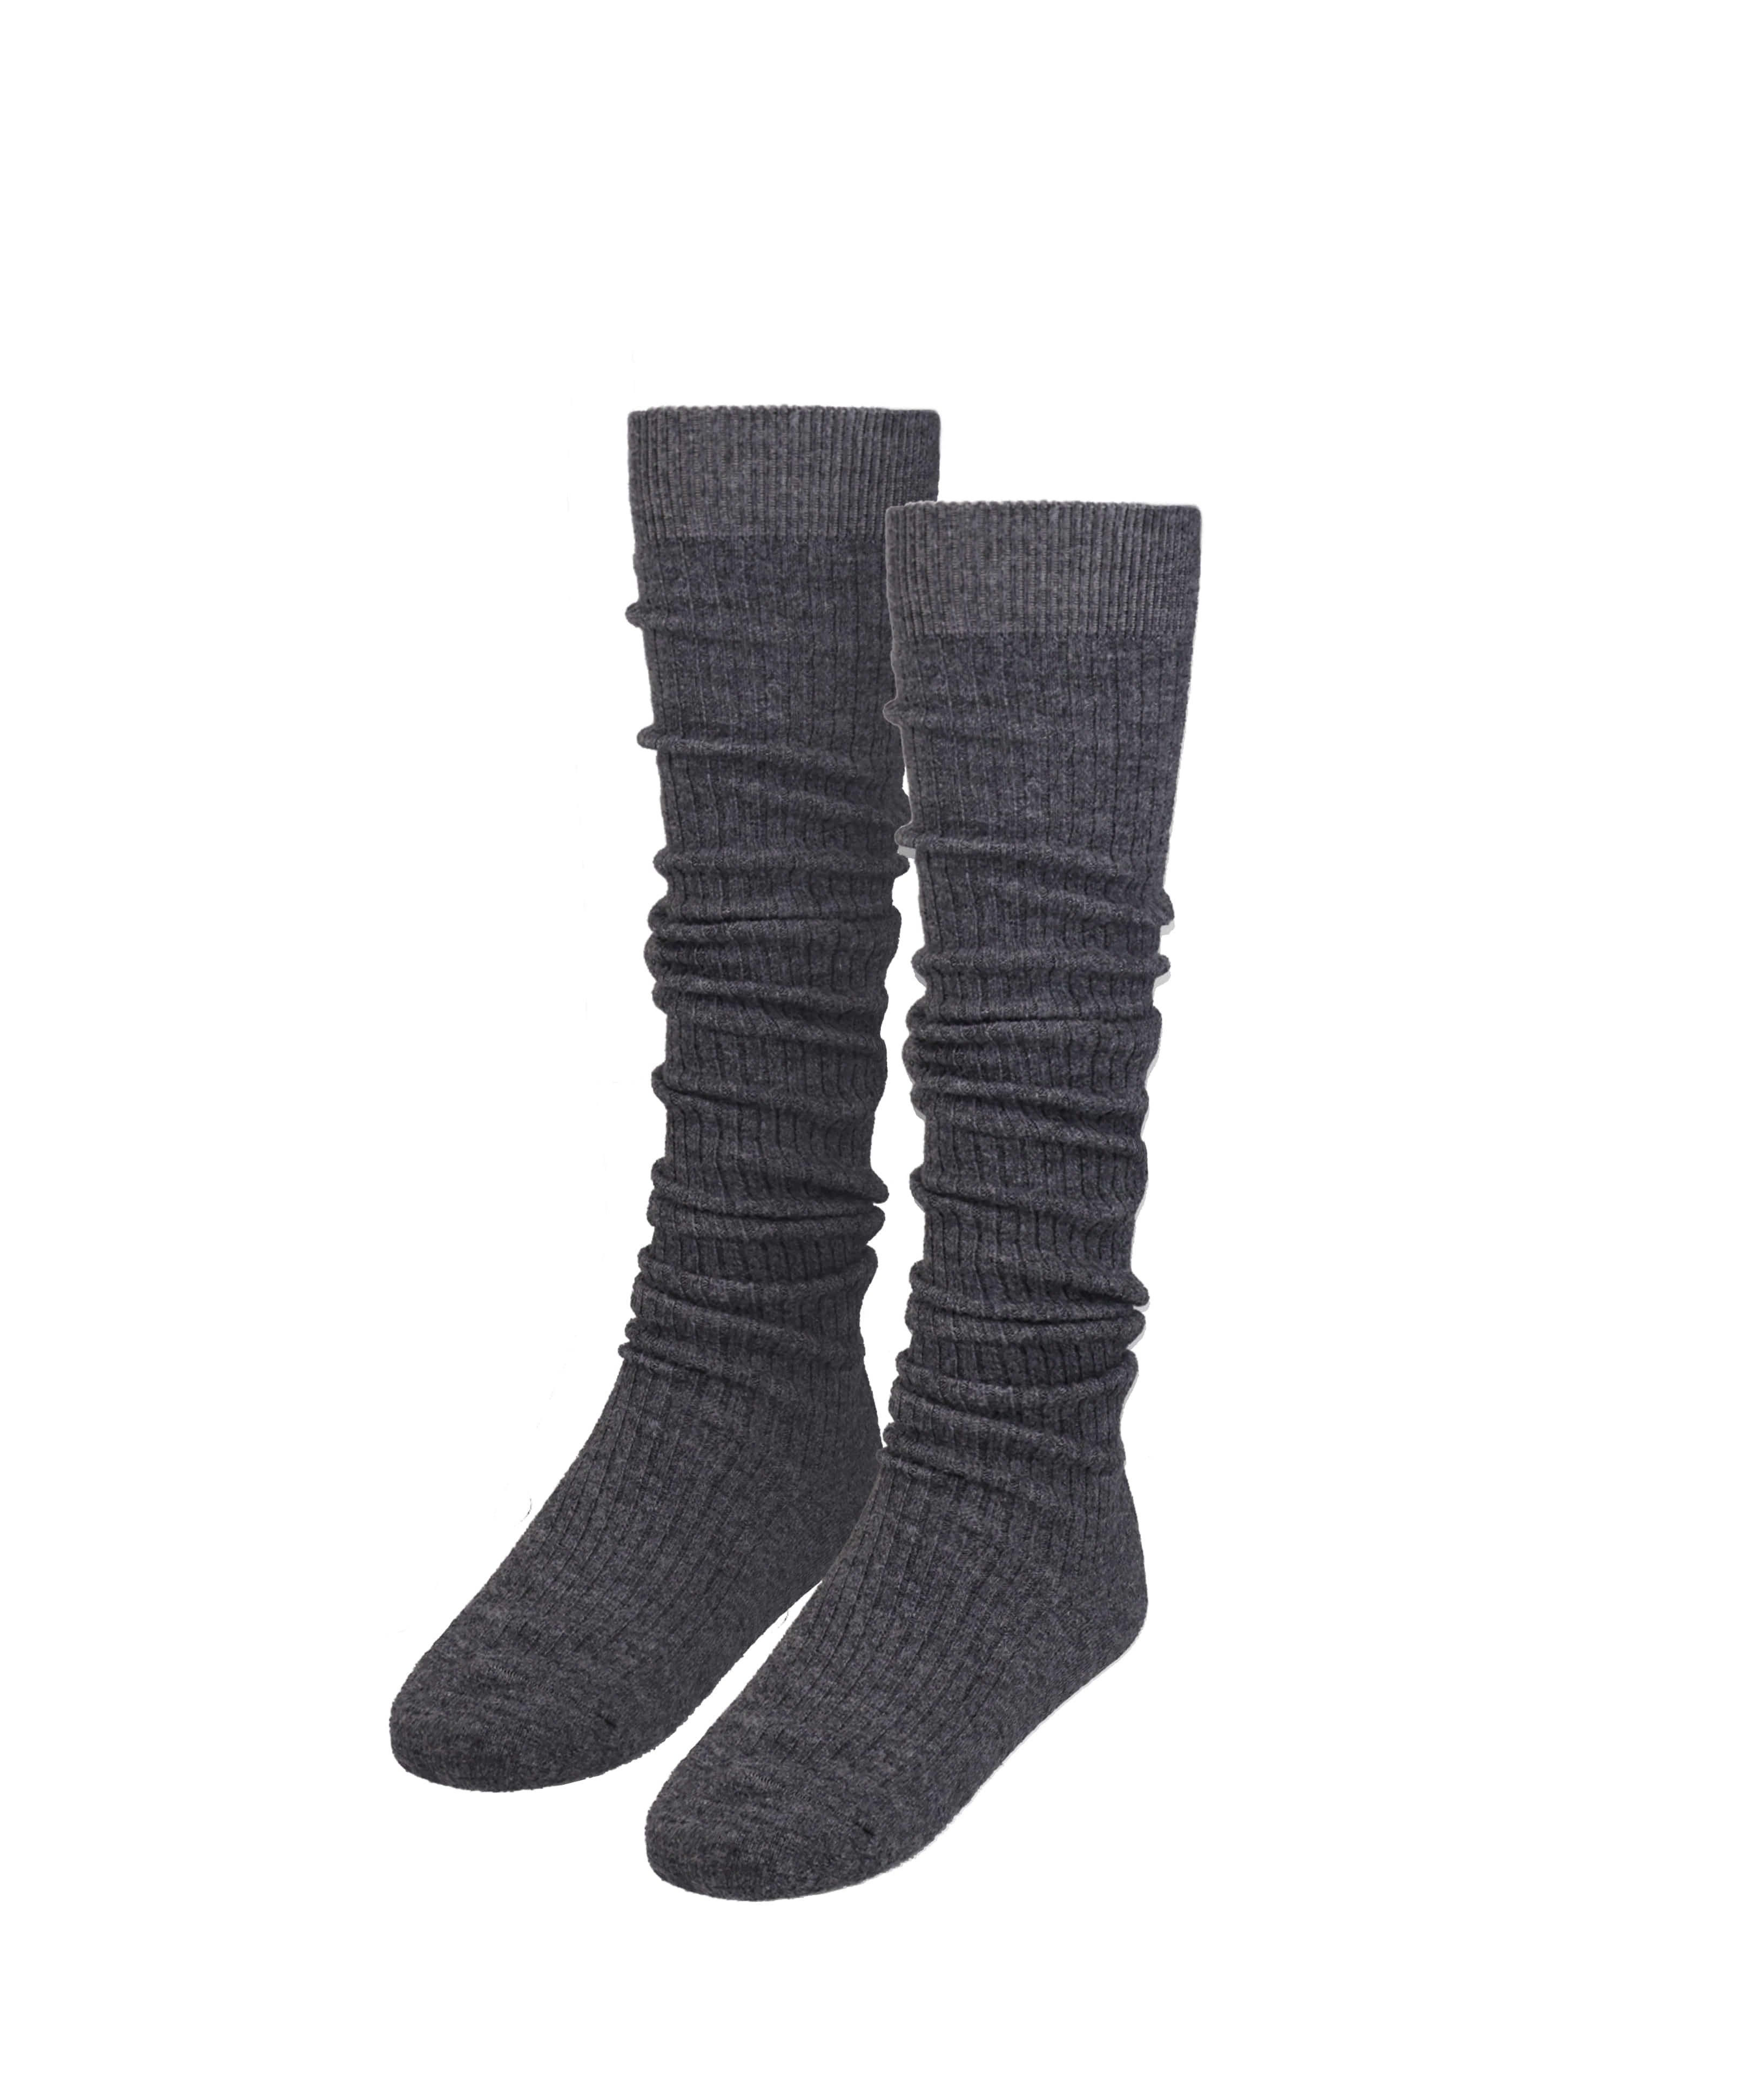 Winter knit socks